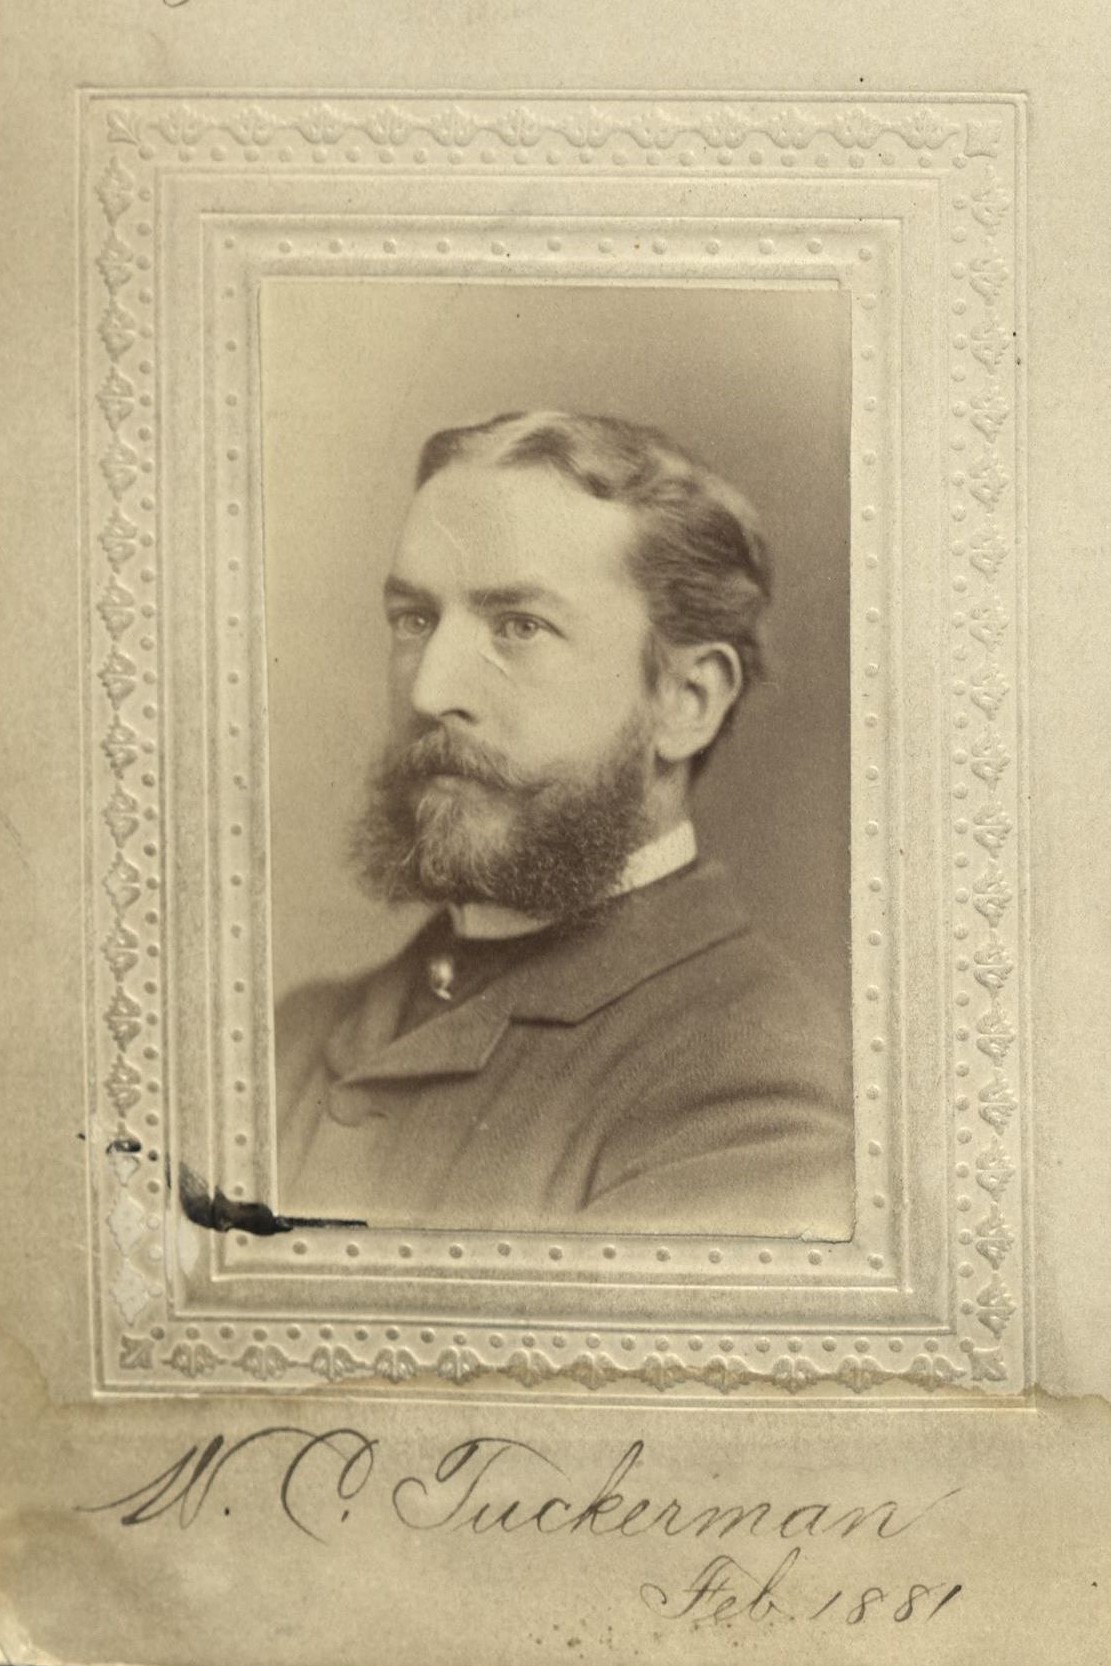 Member portrait of Walter C. Tuckerman